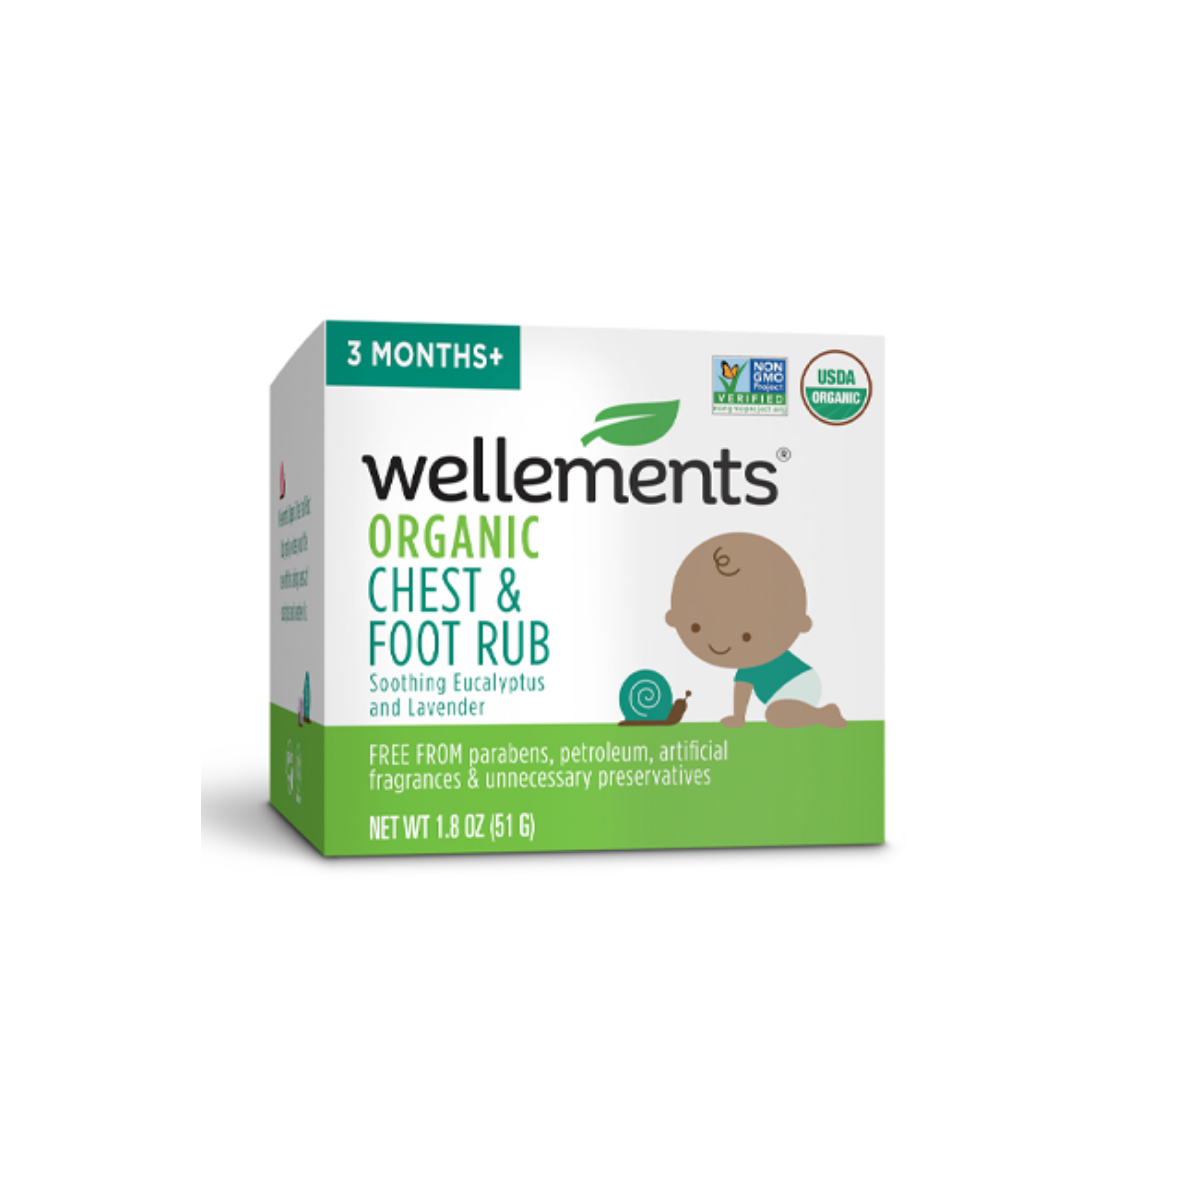 Wellements Organic Chest & Foot Rub